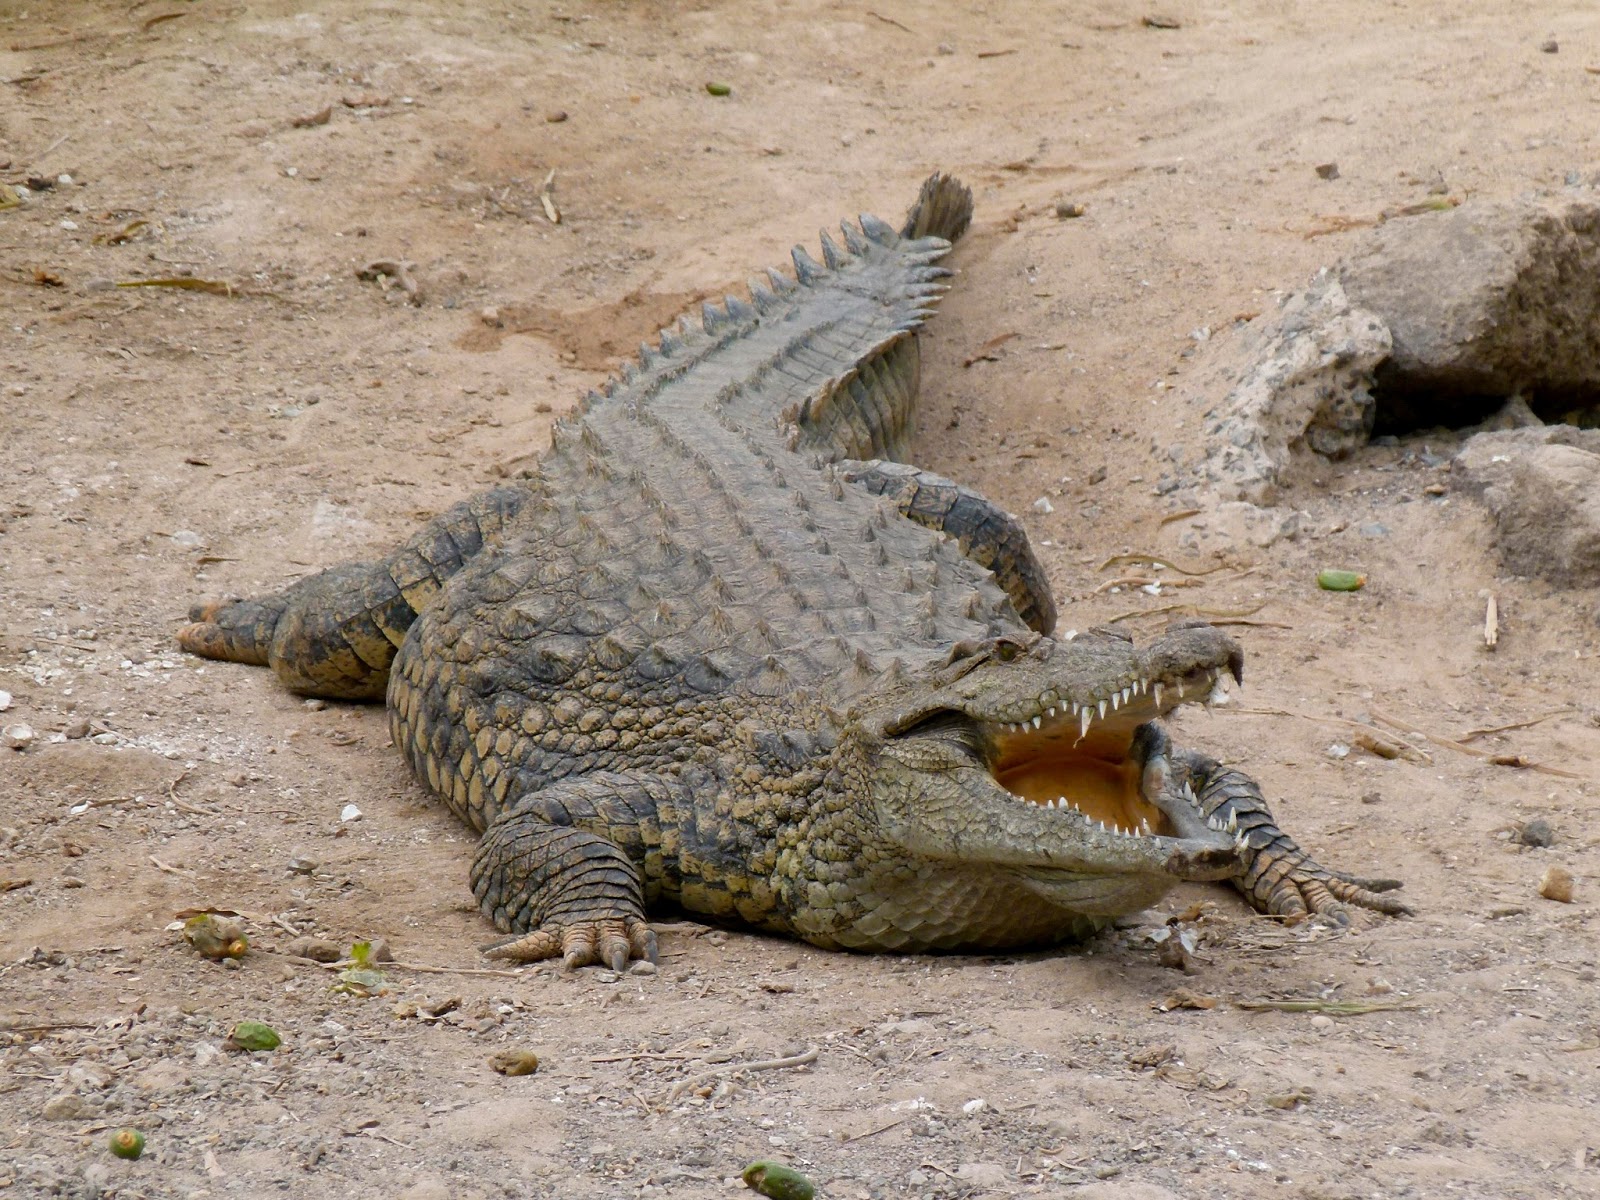 The beautiful dangerous nile crocodile   blogspot.com